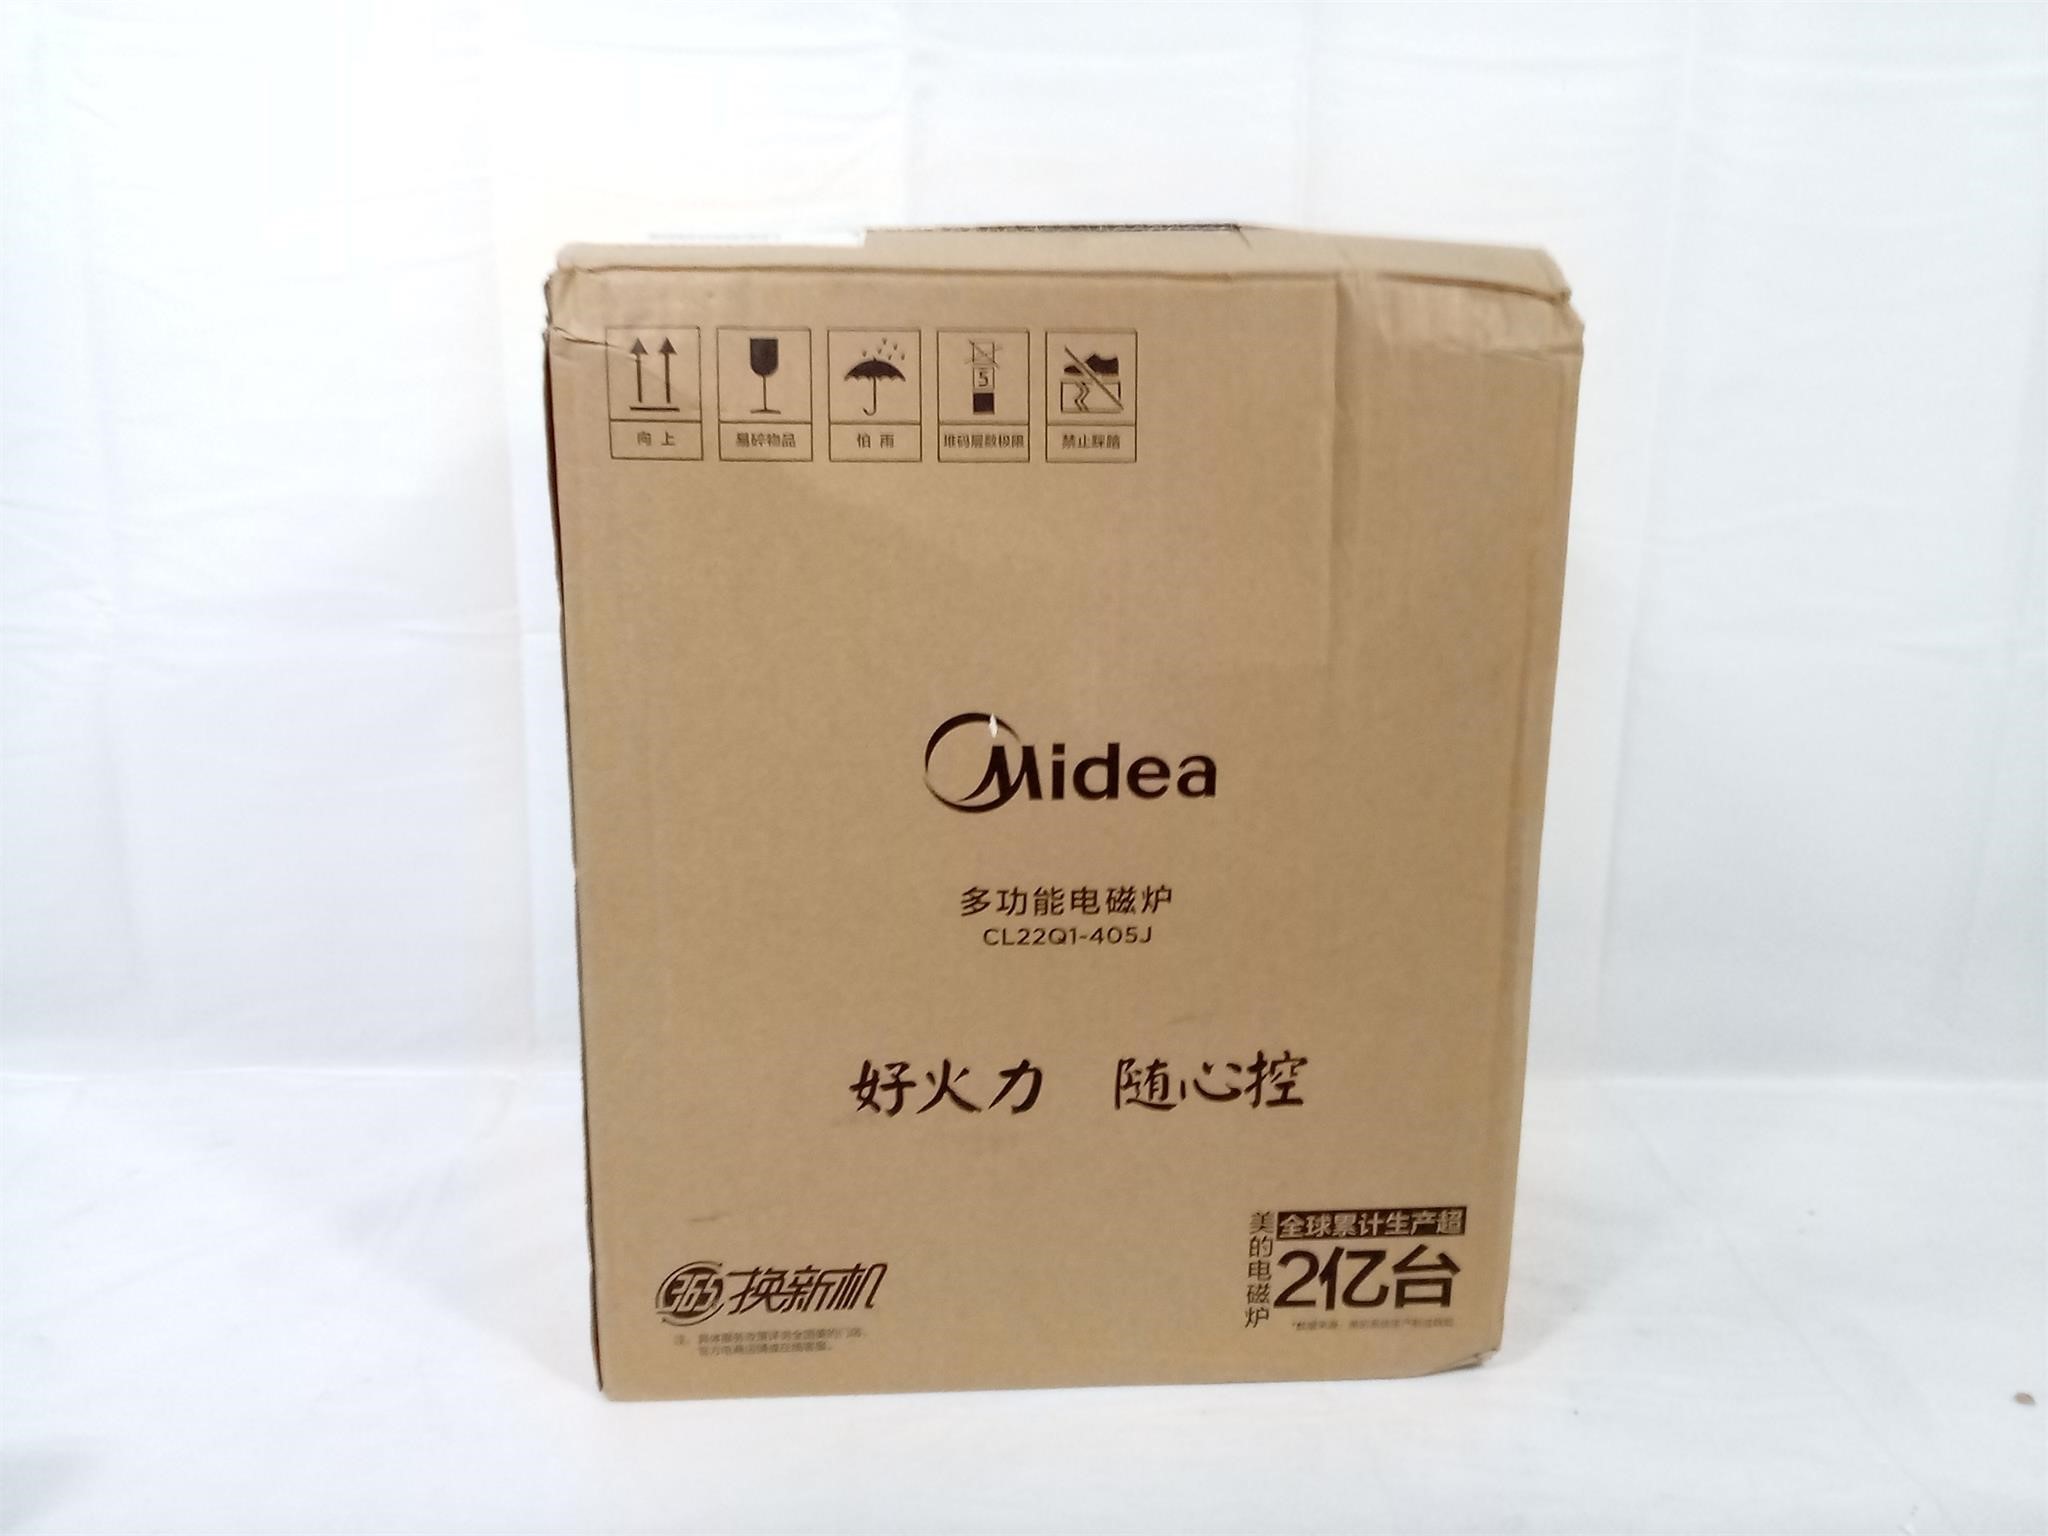 Midea, Portable Kitchen Countertop Induction